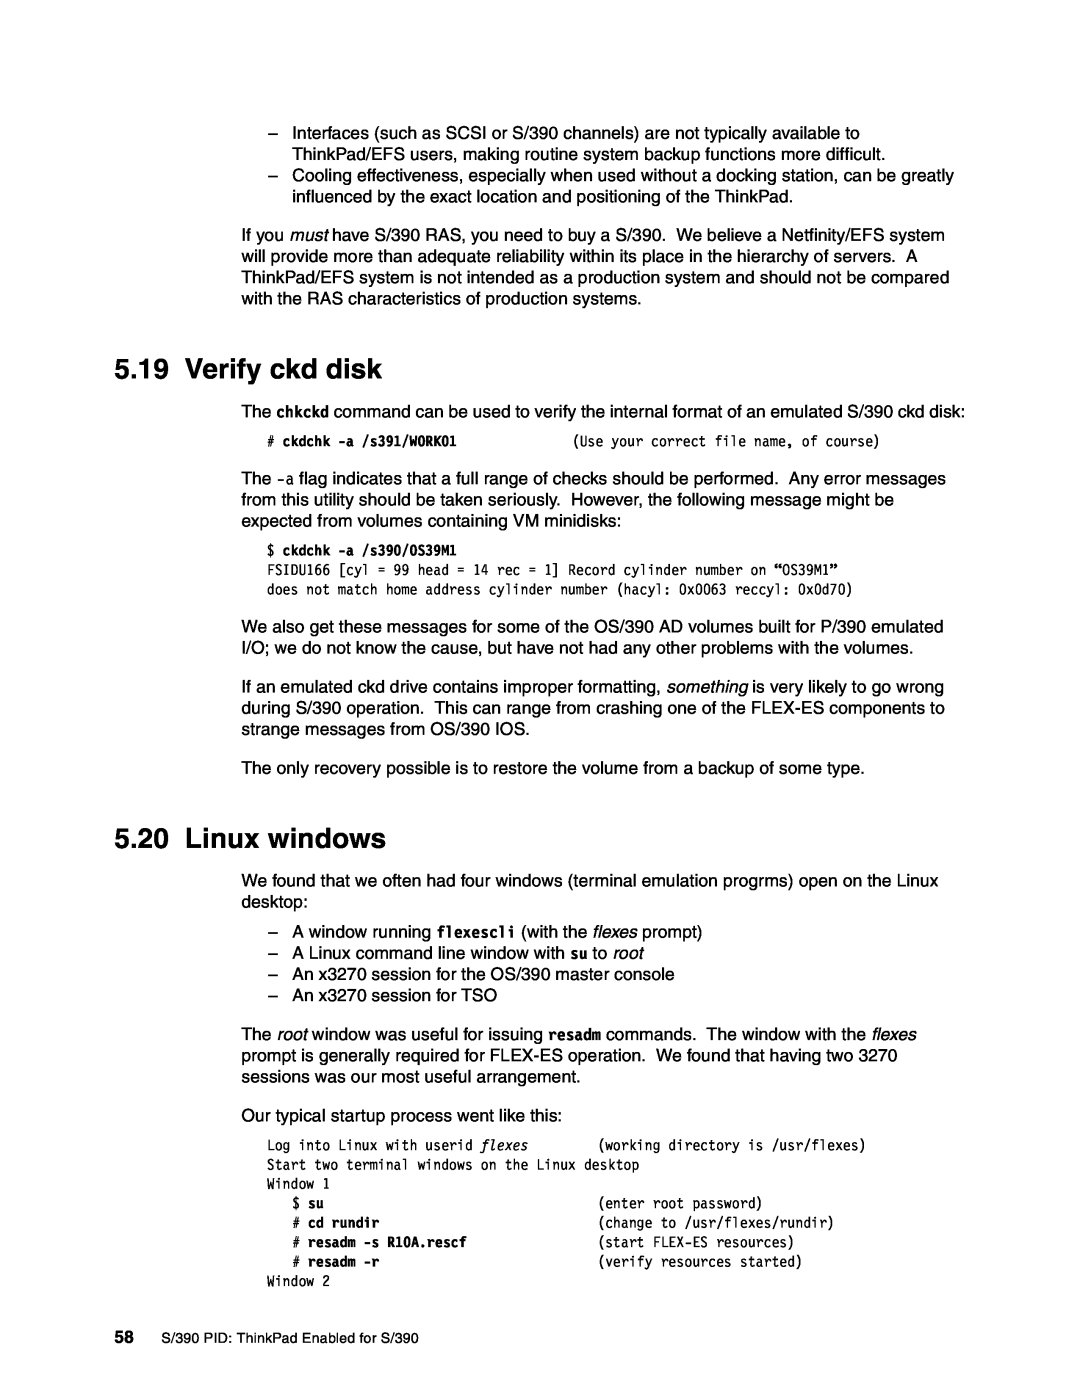 IBM s/390 manual Verify ckd disk, Linux windows 